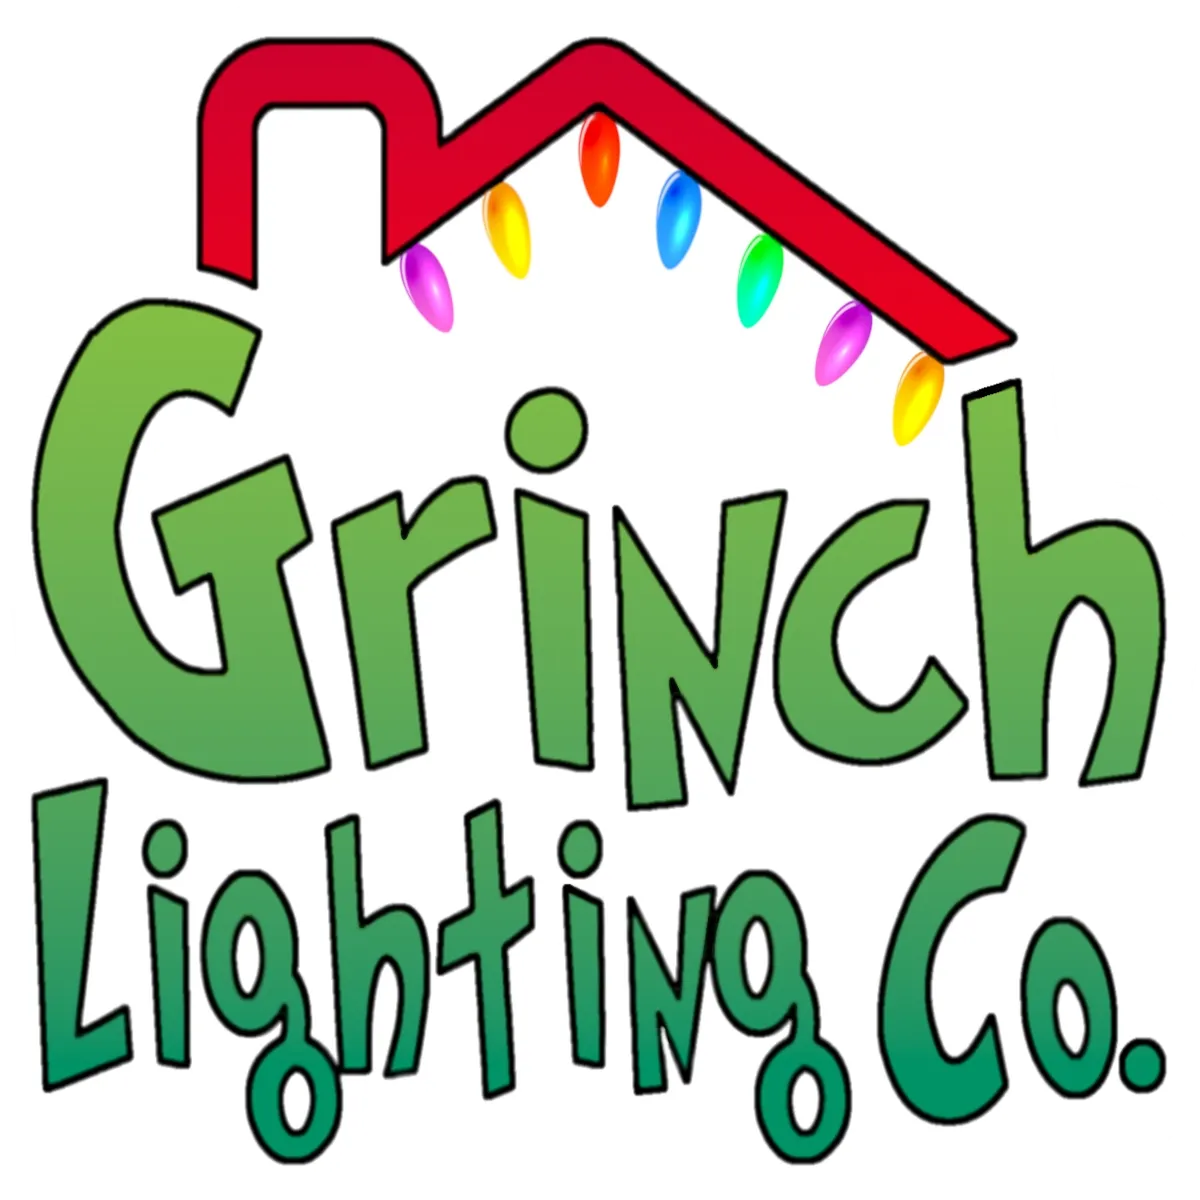 Grinch Lighting Co.